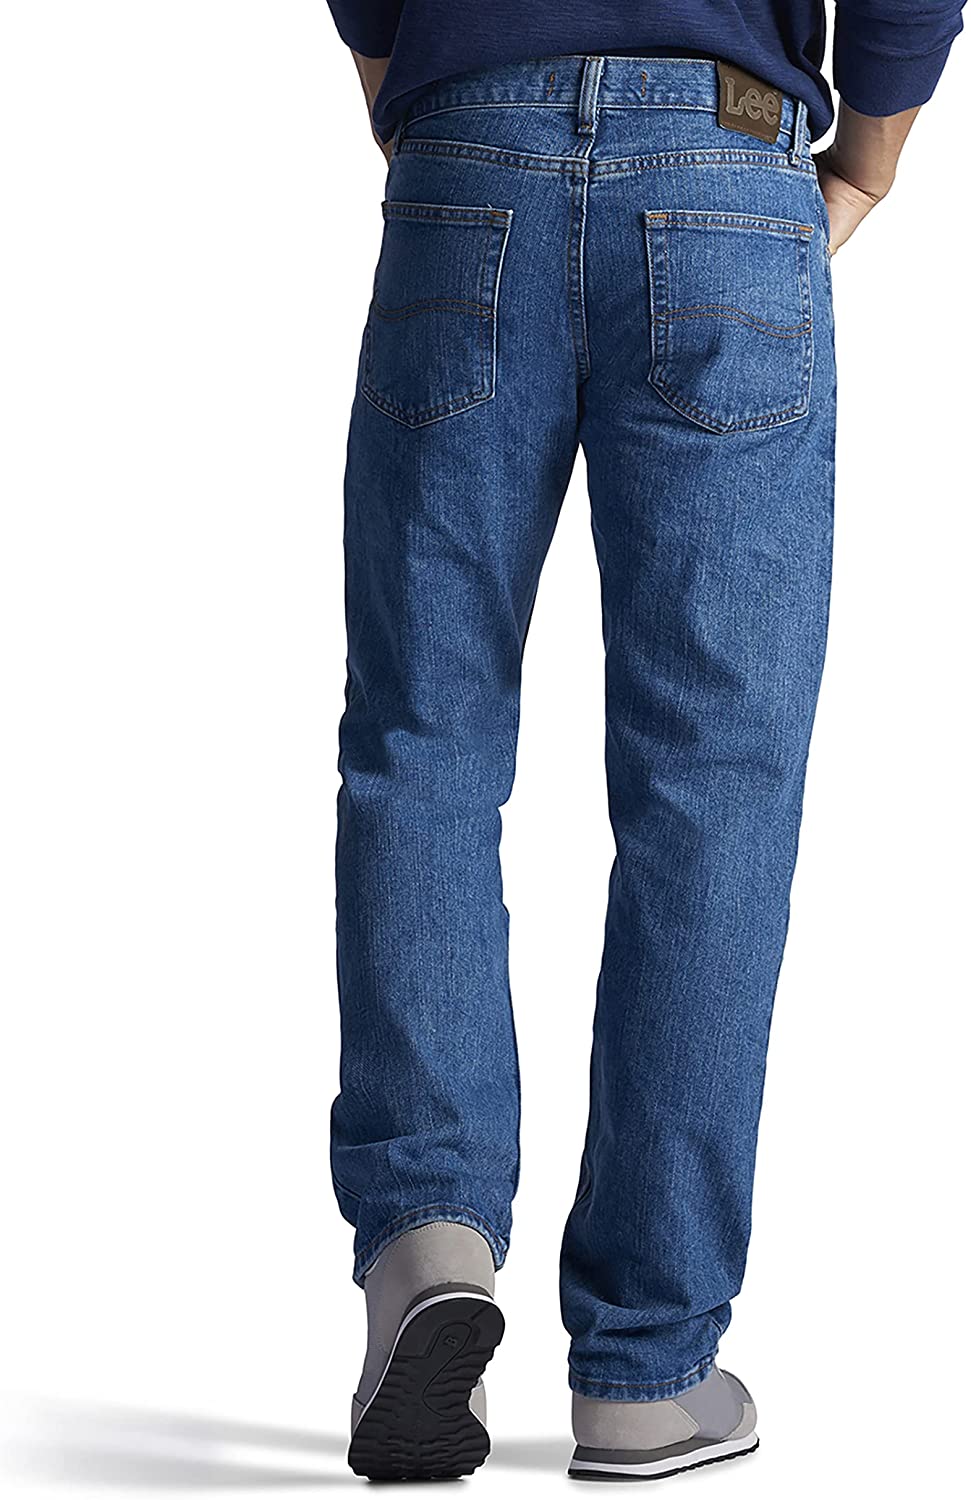 Men's Fit Straight Leg Jean